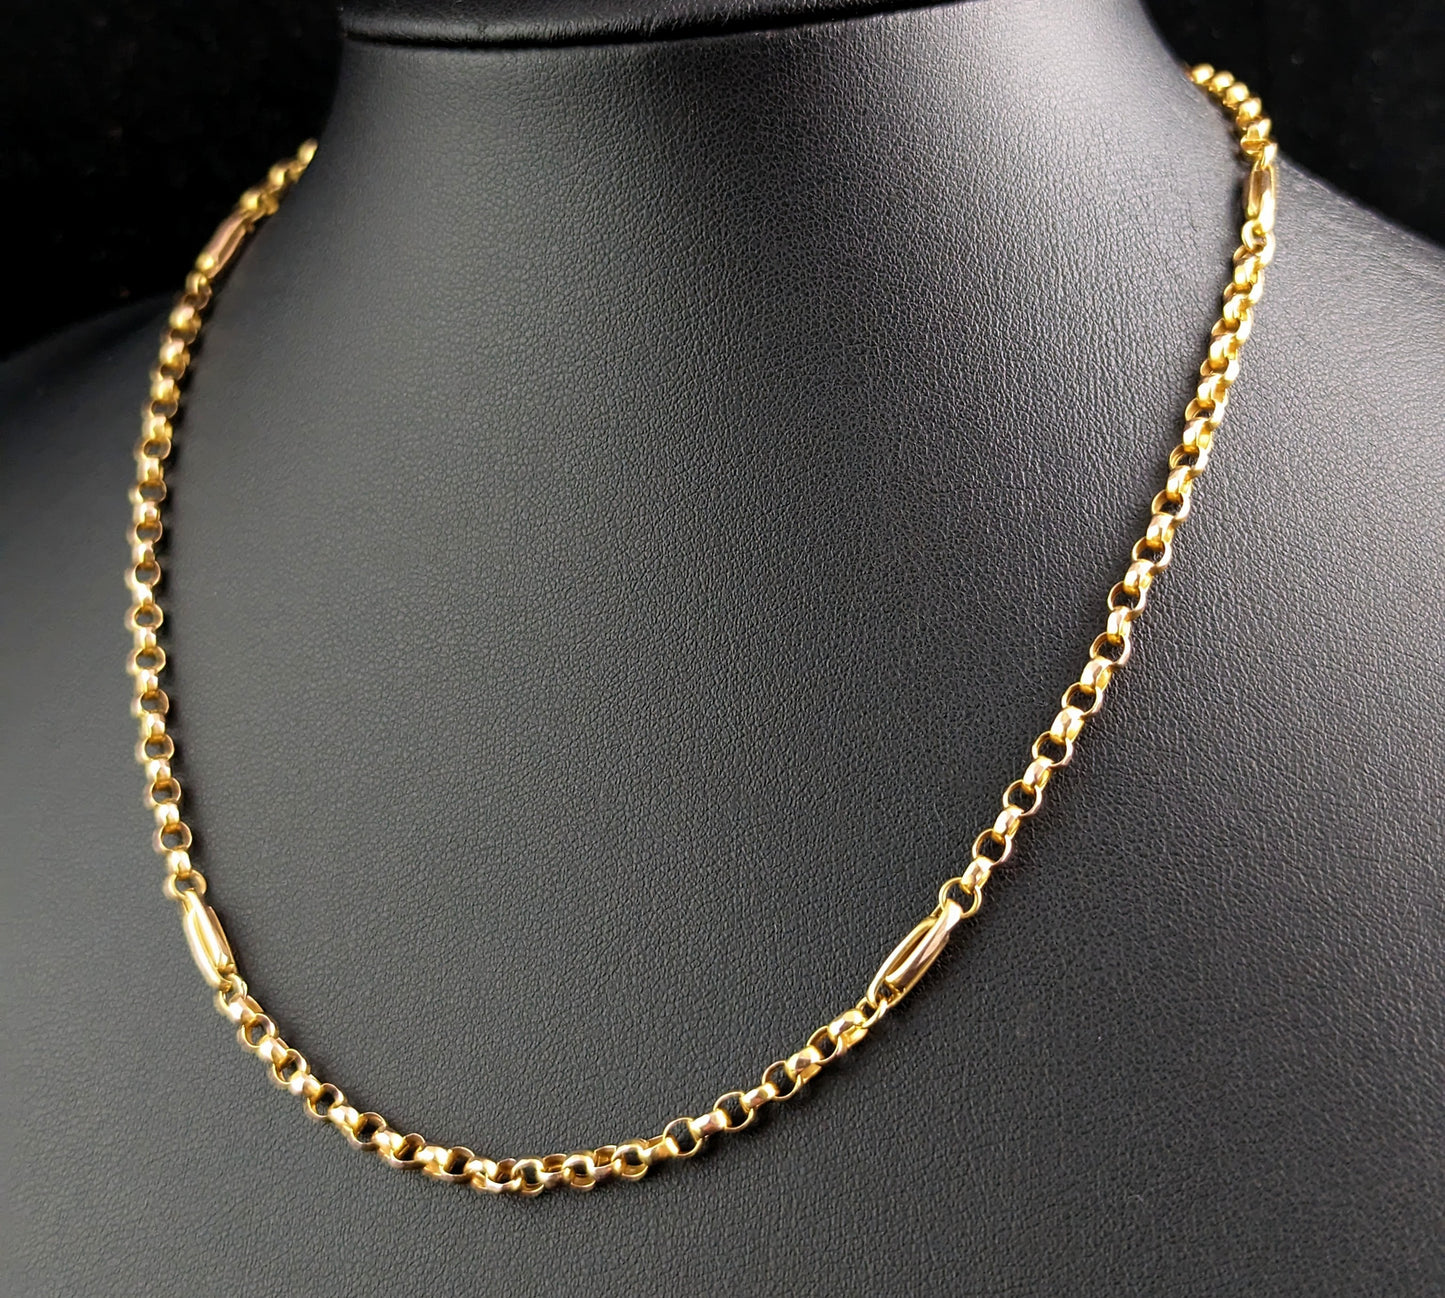 Antique 9ct gold chain necklace, Fancy link, Edwardian